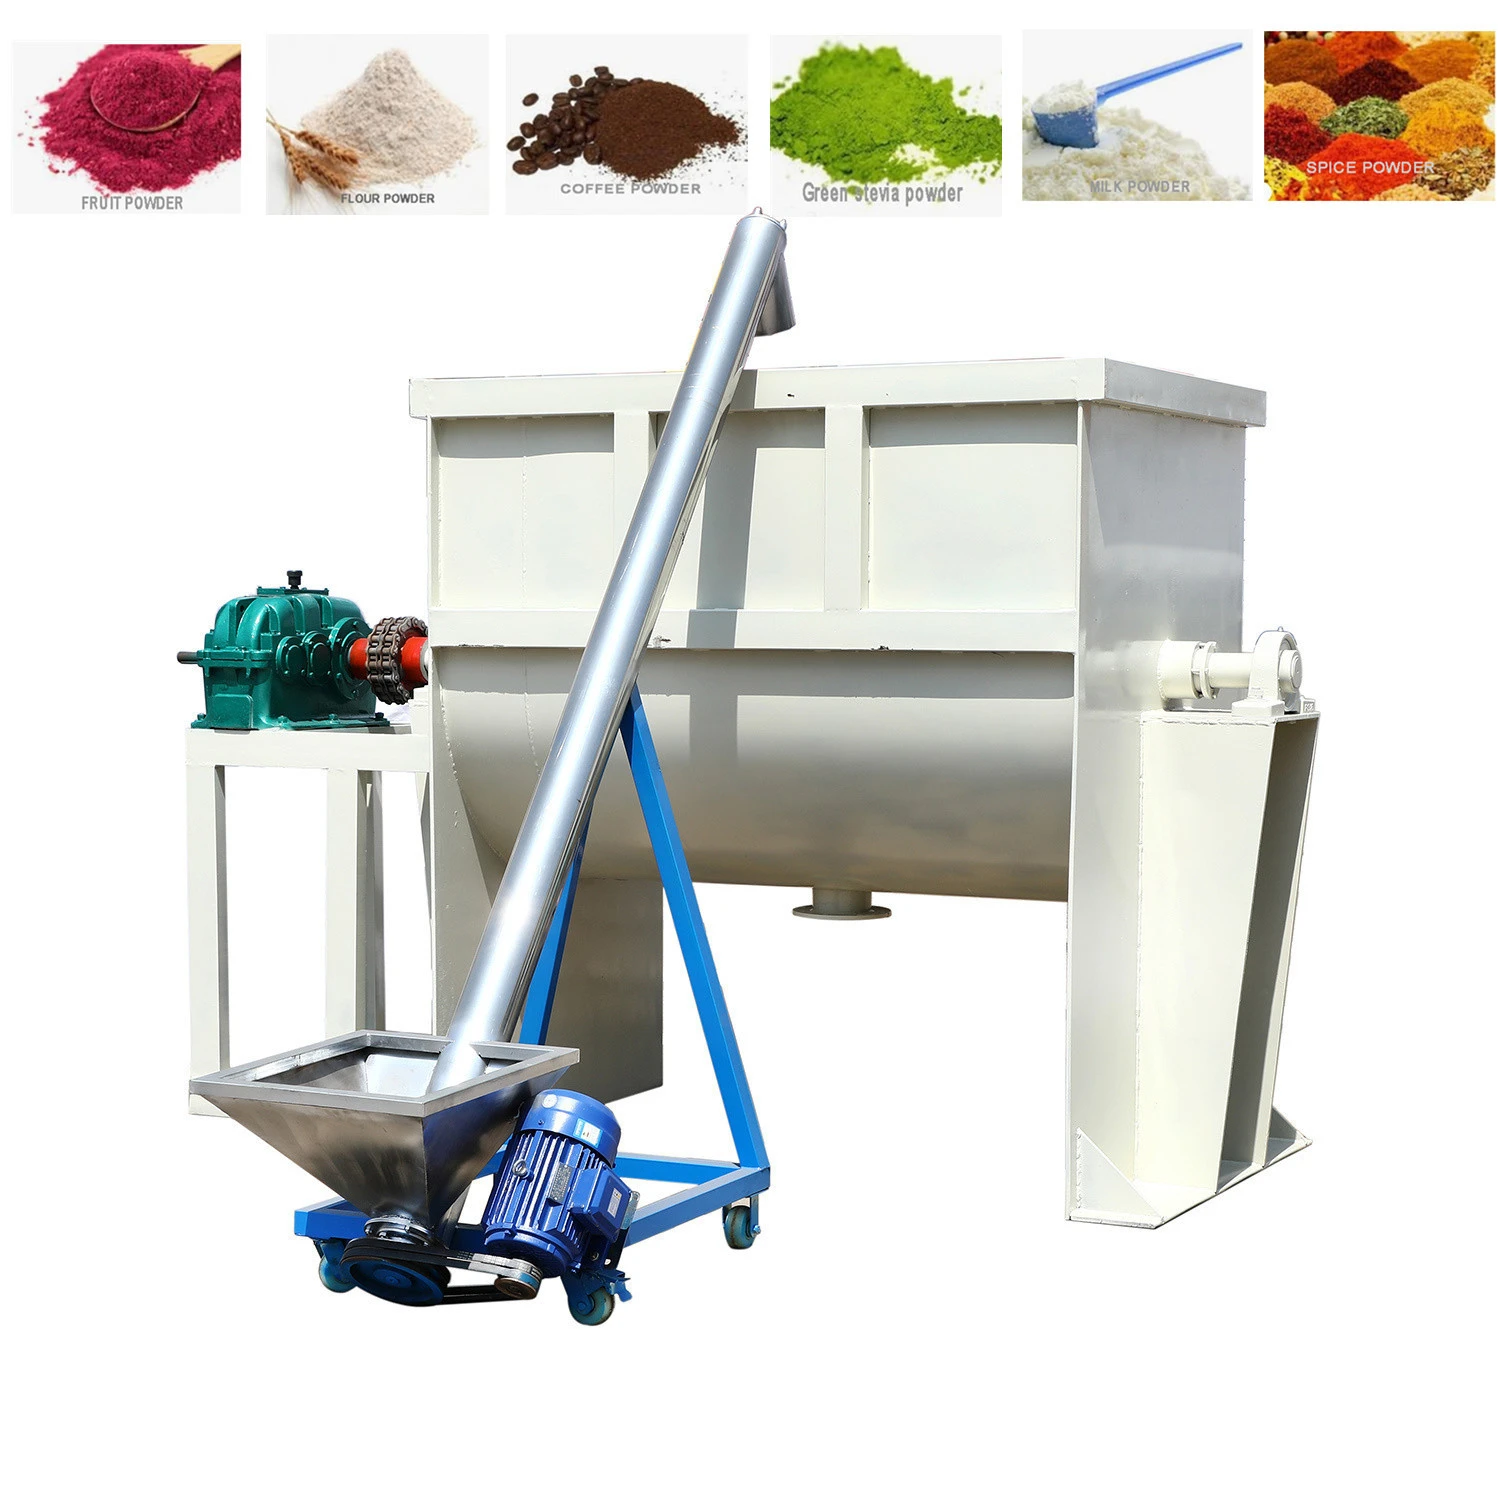 https://img2.tradewheel.com/uploads/images/products/6/4/small-manual-washing-powder-mixer-detergent-powder-making-machine-price-horizontal-ribbon-blender-equipment1-0984208001618861049.jpg.webp